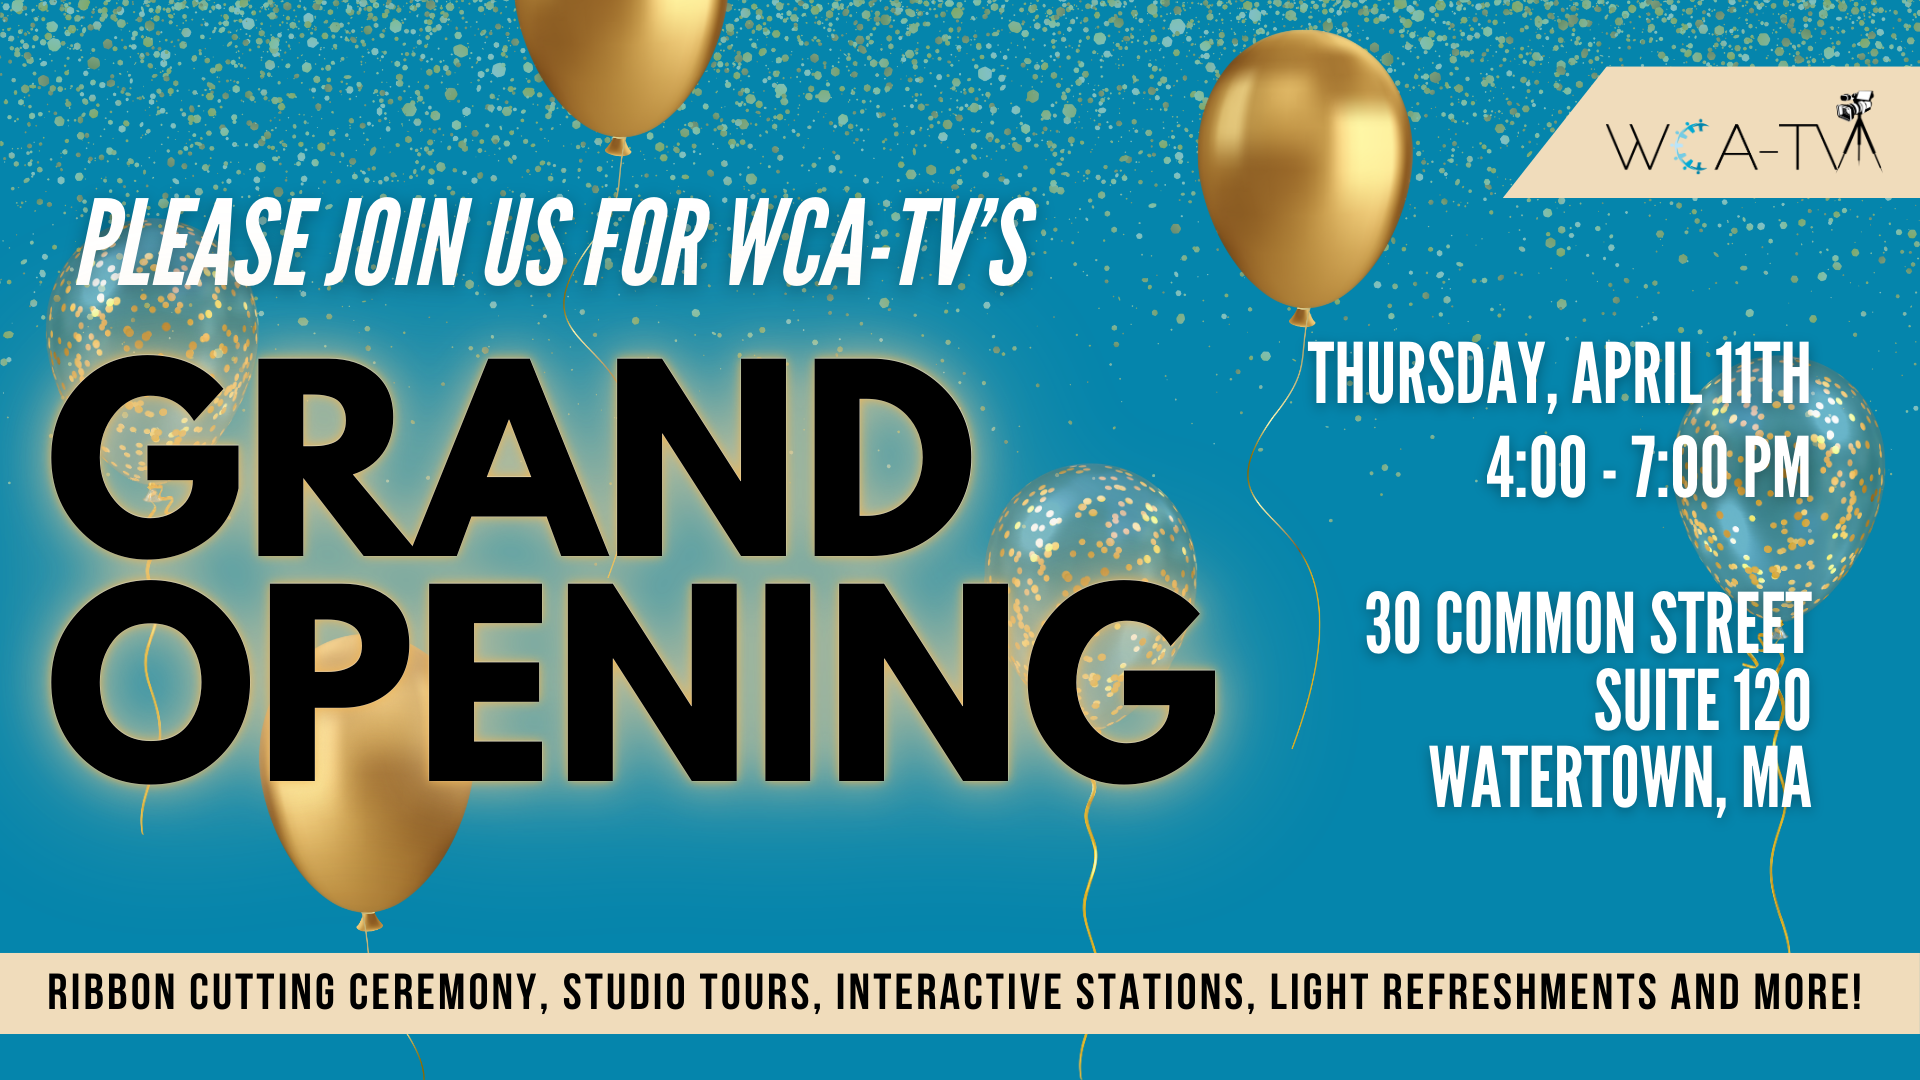 Tour WCA-TV’s Brand New Studio During Grand Opening Celebration